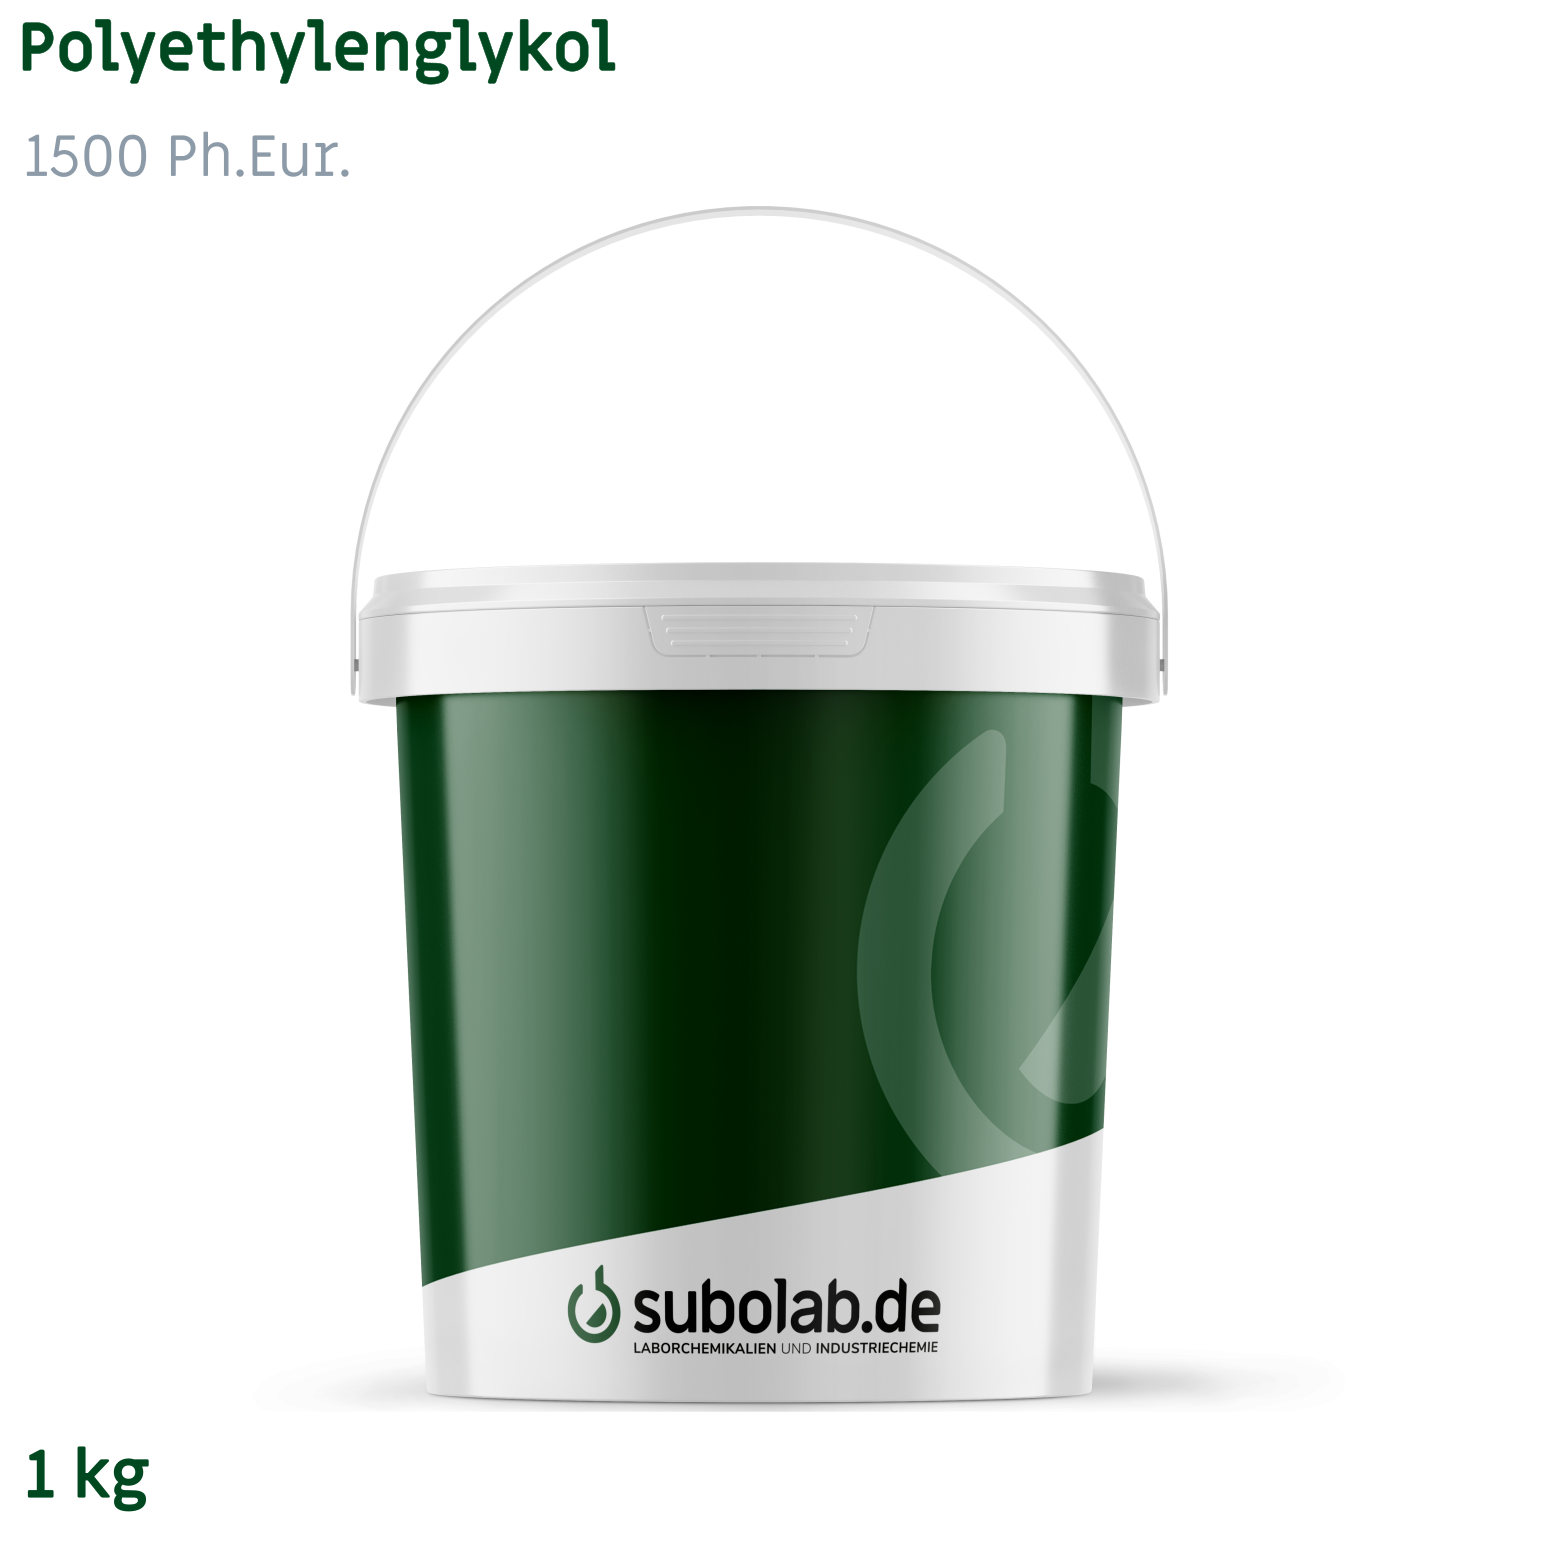 Bild von Polyethylenglykol 1500 Ph.Eur. (1 kg)